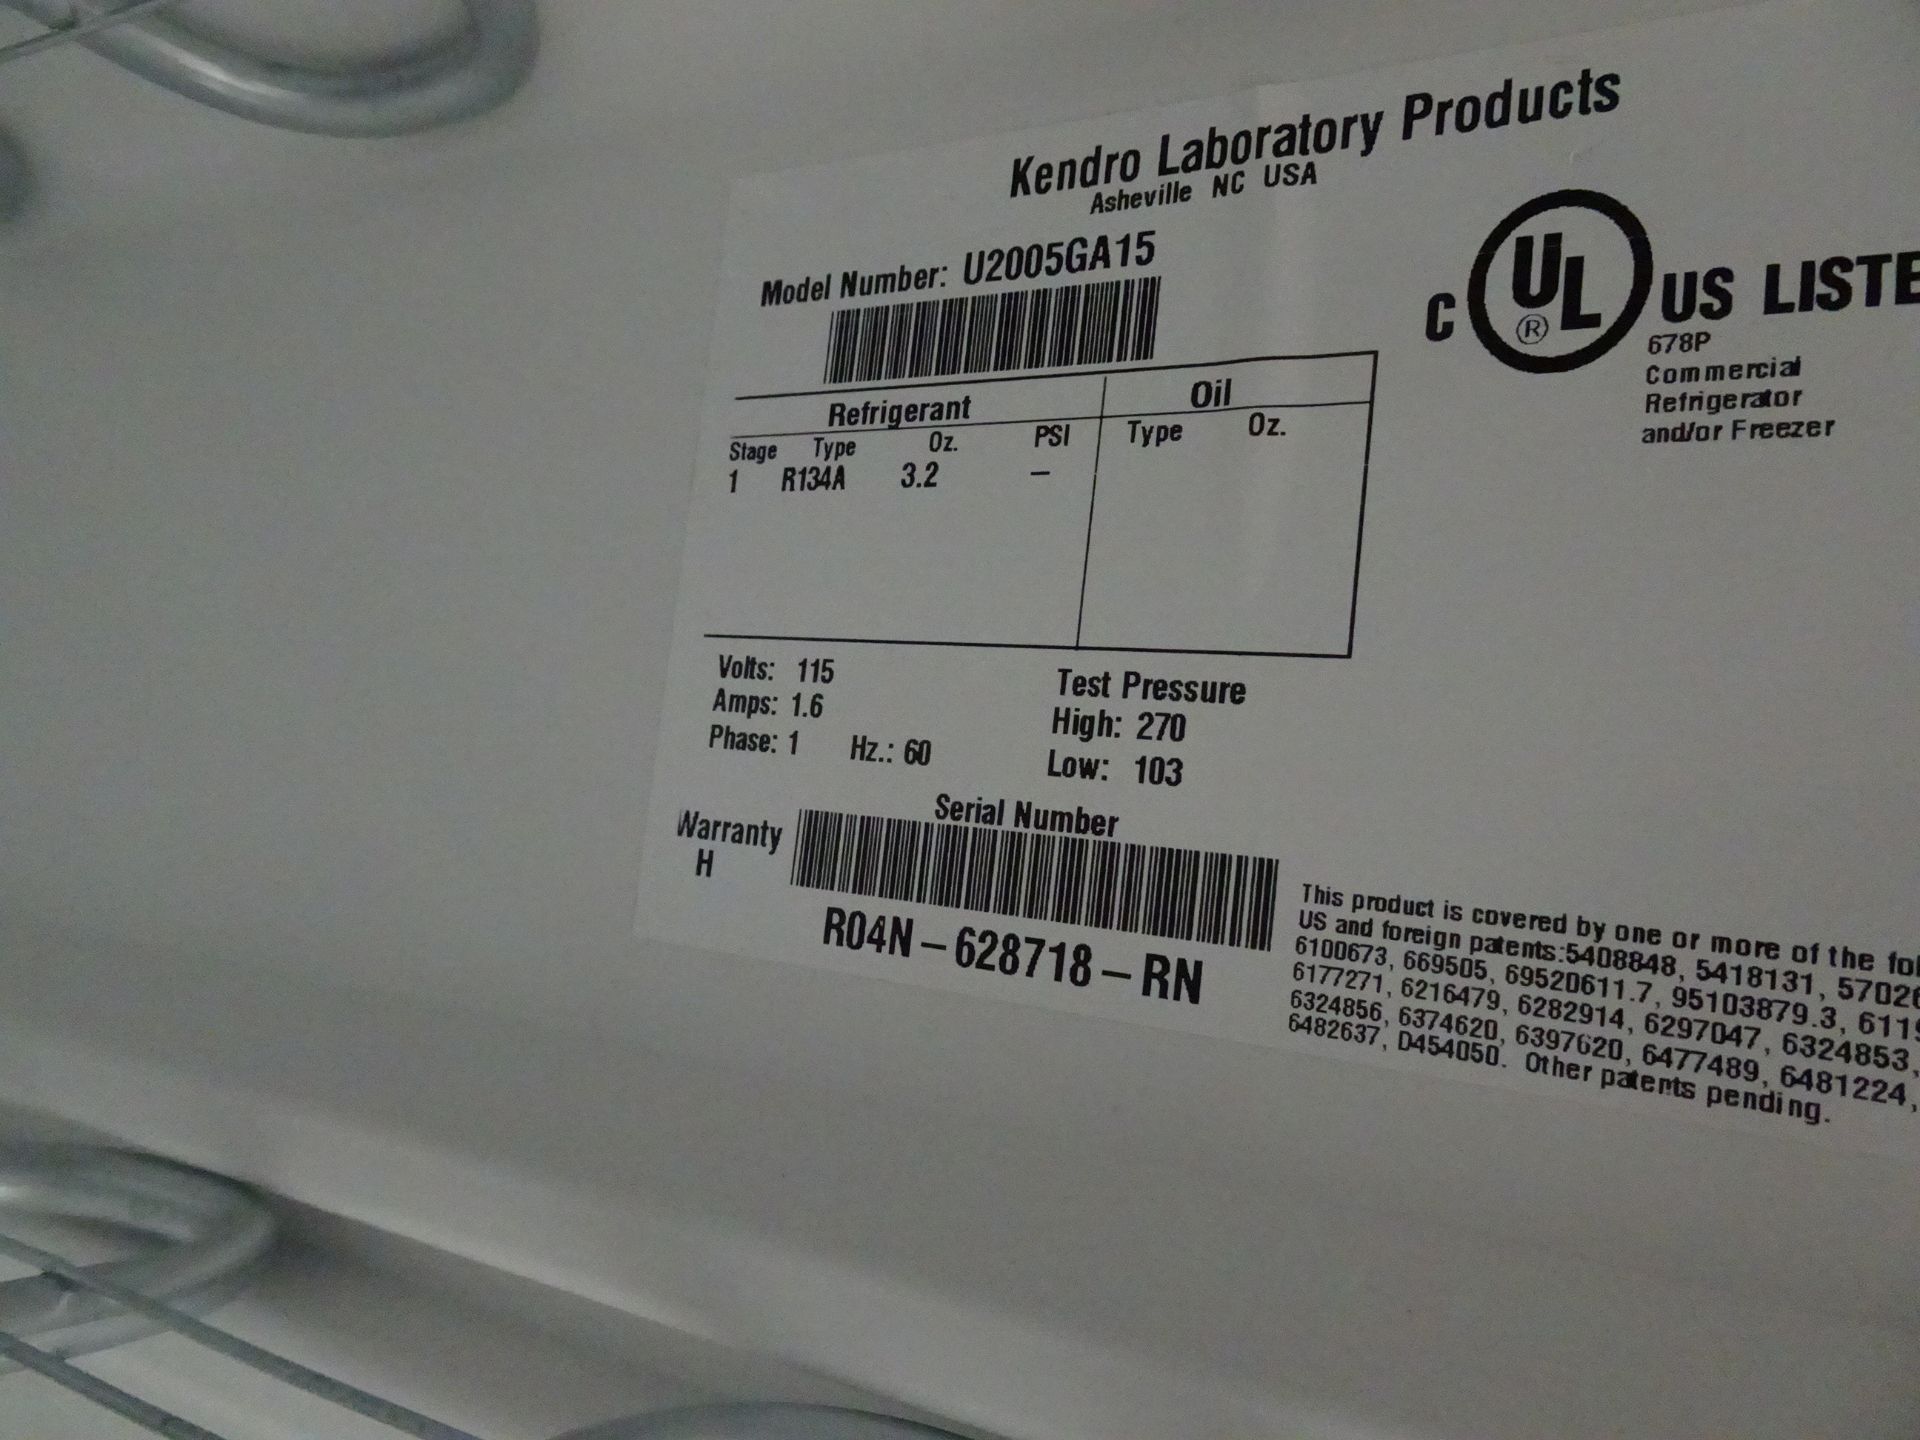 Kendro Laboratory Products Model U2005GA15 Under CabinetRefrigerator / Freezer sn R04N-628718-RN - Image 4 of 5